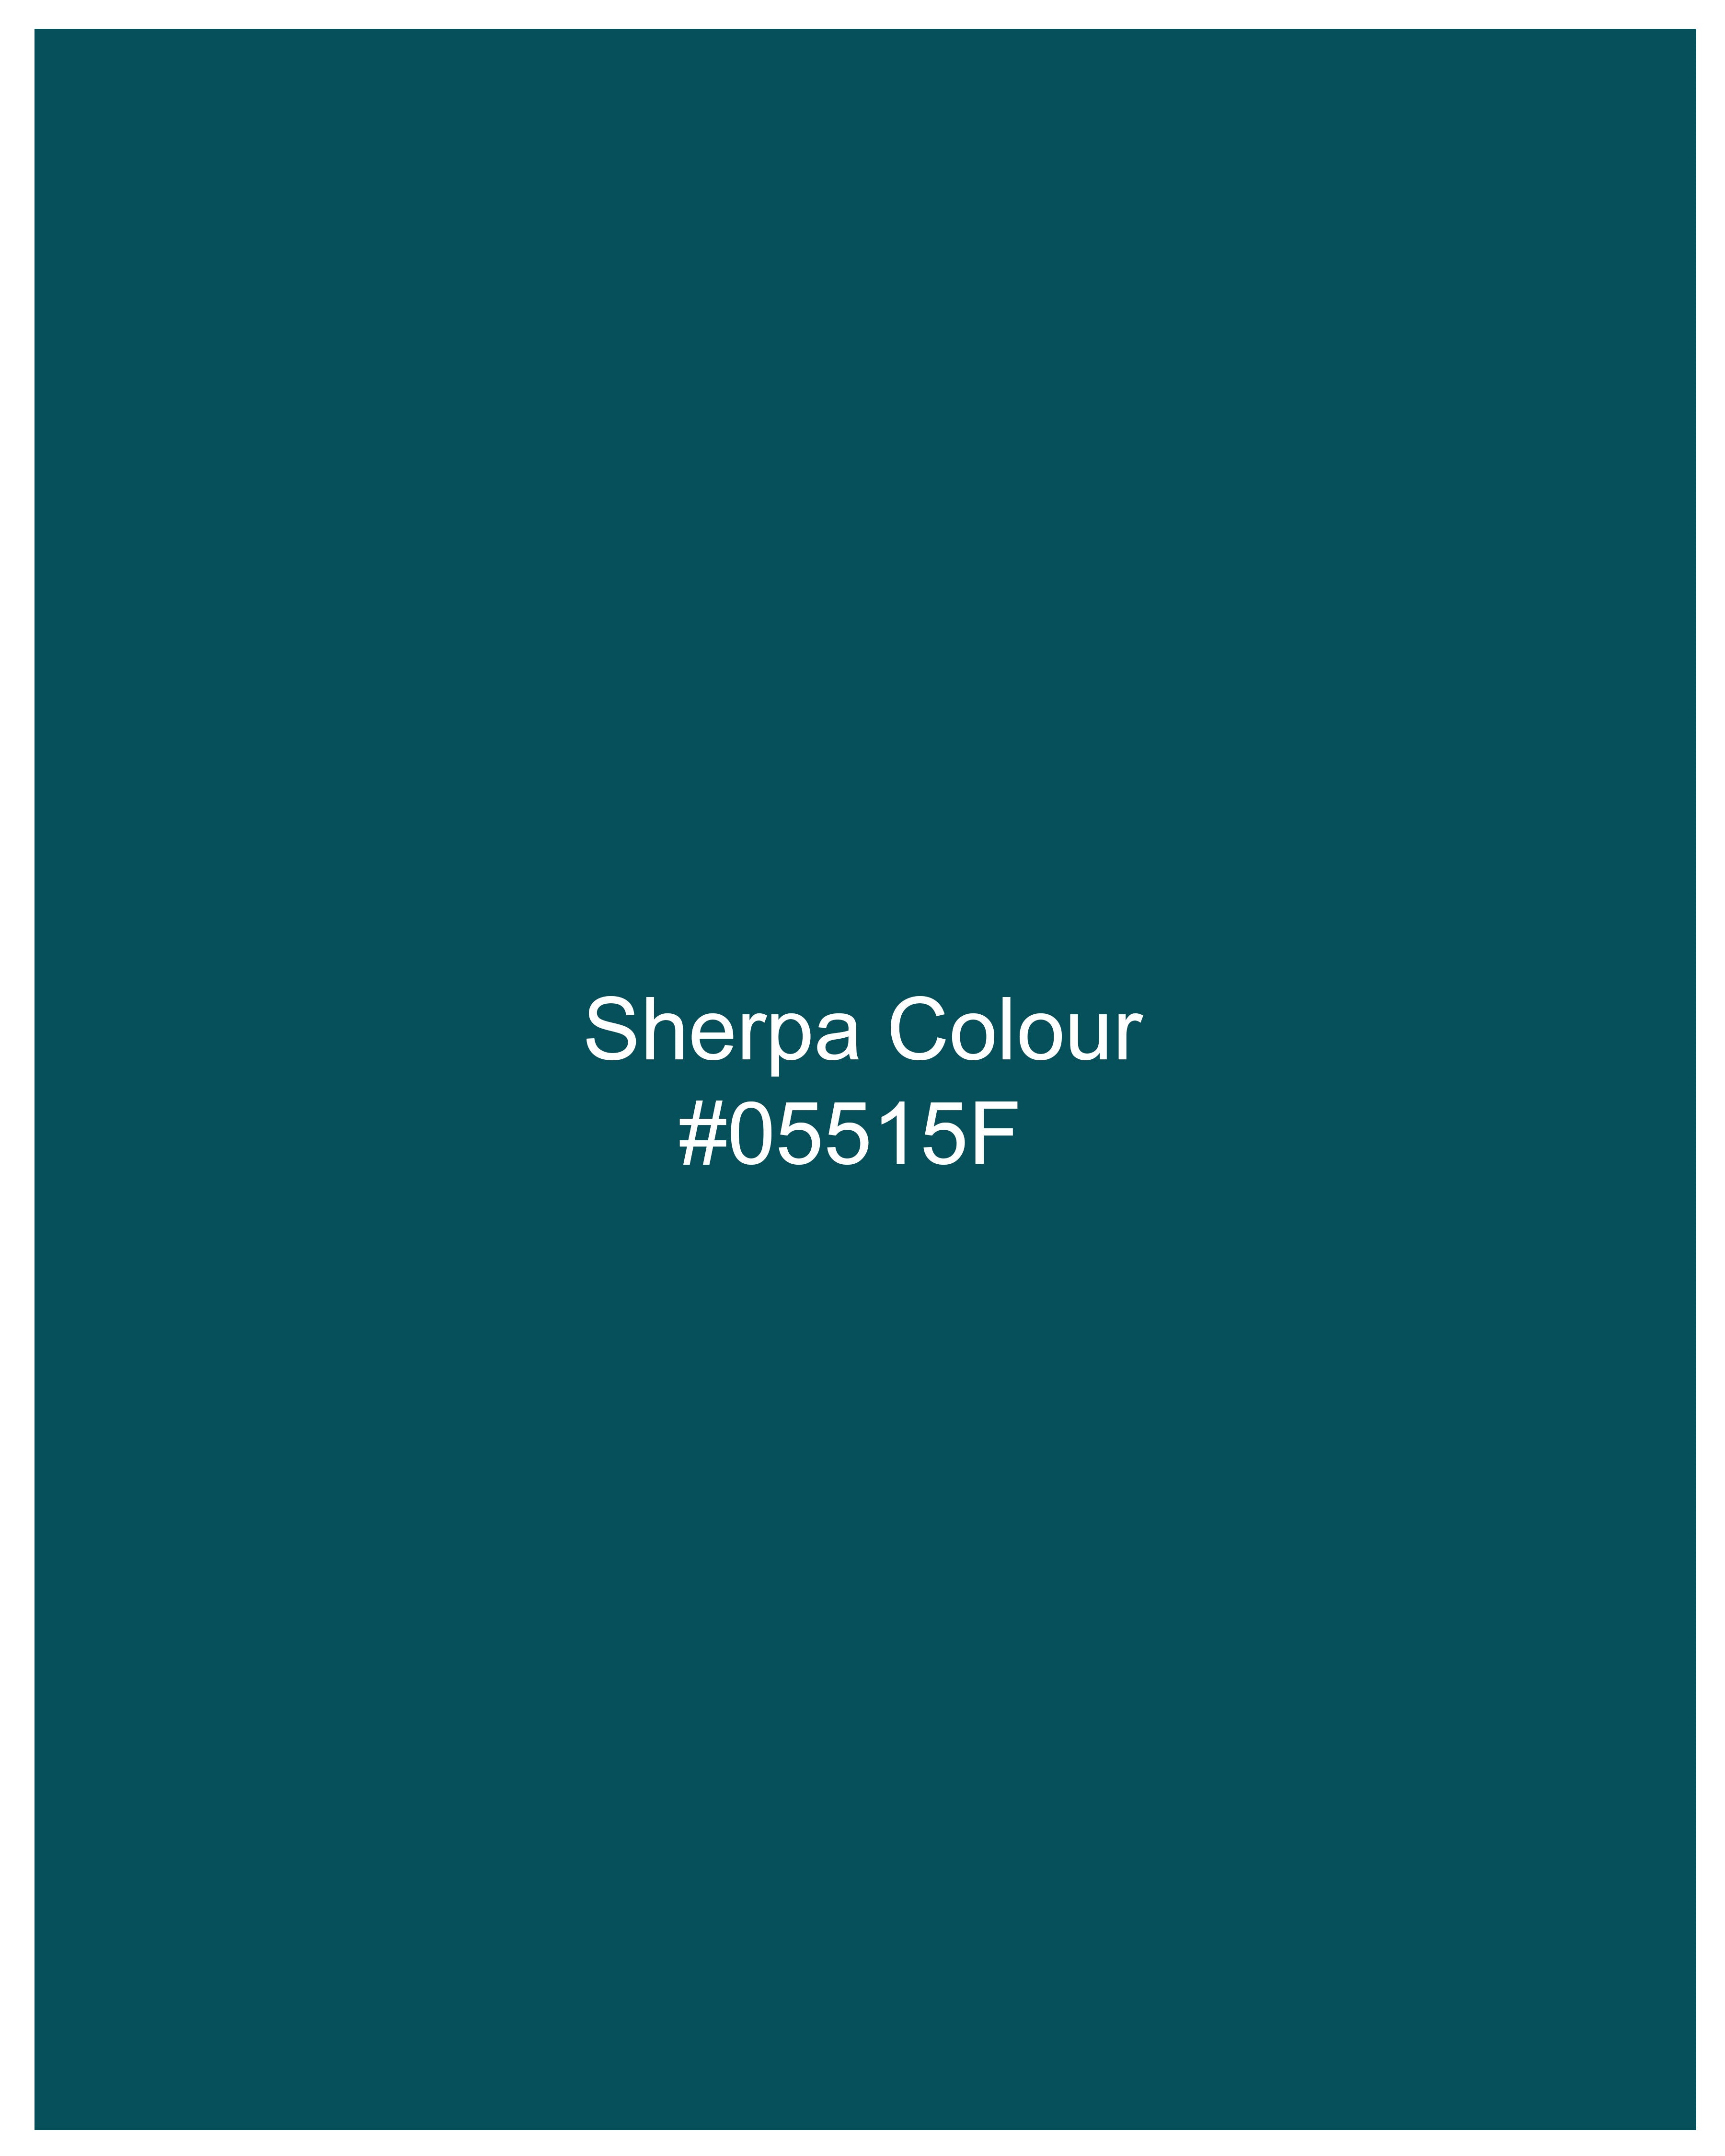 Sherpa Blue Embroidered Super Soft Premium Cotton Shirt 9704-M-BLK-38, 9704-M-BLK-H-38, 9704-M-BLK-39, 9704-M-BLK-H-39, 9704-M-BLK-40, 9704-M-BLK-H-40, 9704-M-BLK-42, 9704-M-BLK-H-42, 9704-M-BLK-44, 9704-M-BLK-H-44, 9704-M-BLK-46, 9704-M-BLK-H-46, 9704-M-BLK-48, 9704-M-BLK-H-48, 9704-M-BLK-50, 9704-M-BLK-H-50, 9704-M-BLK-52, 9704-M-BLK-H-52